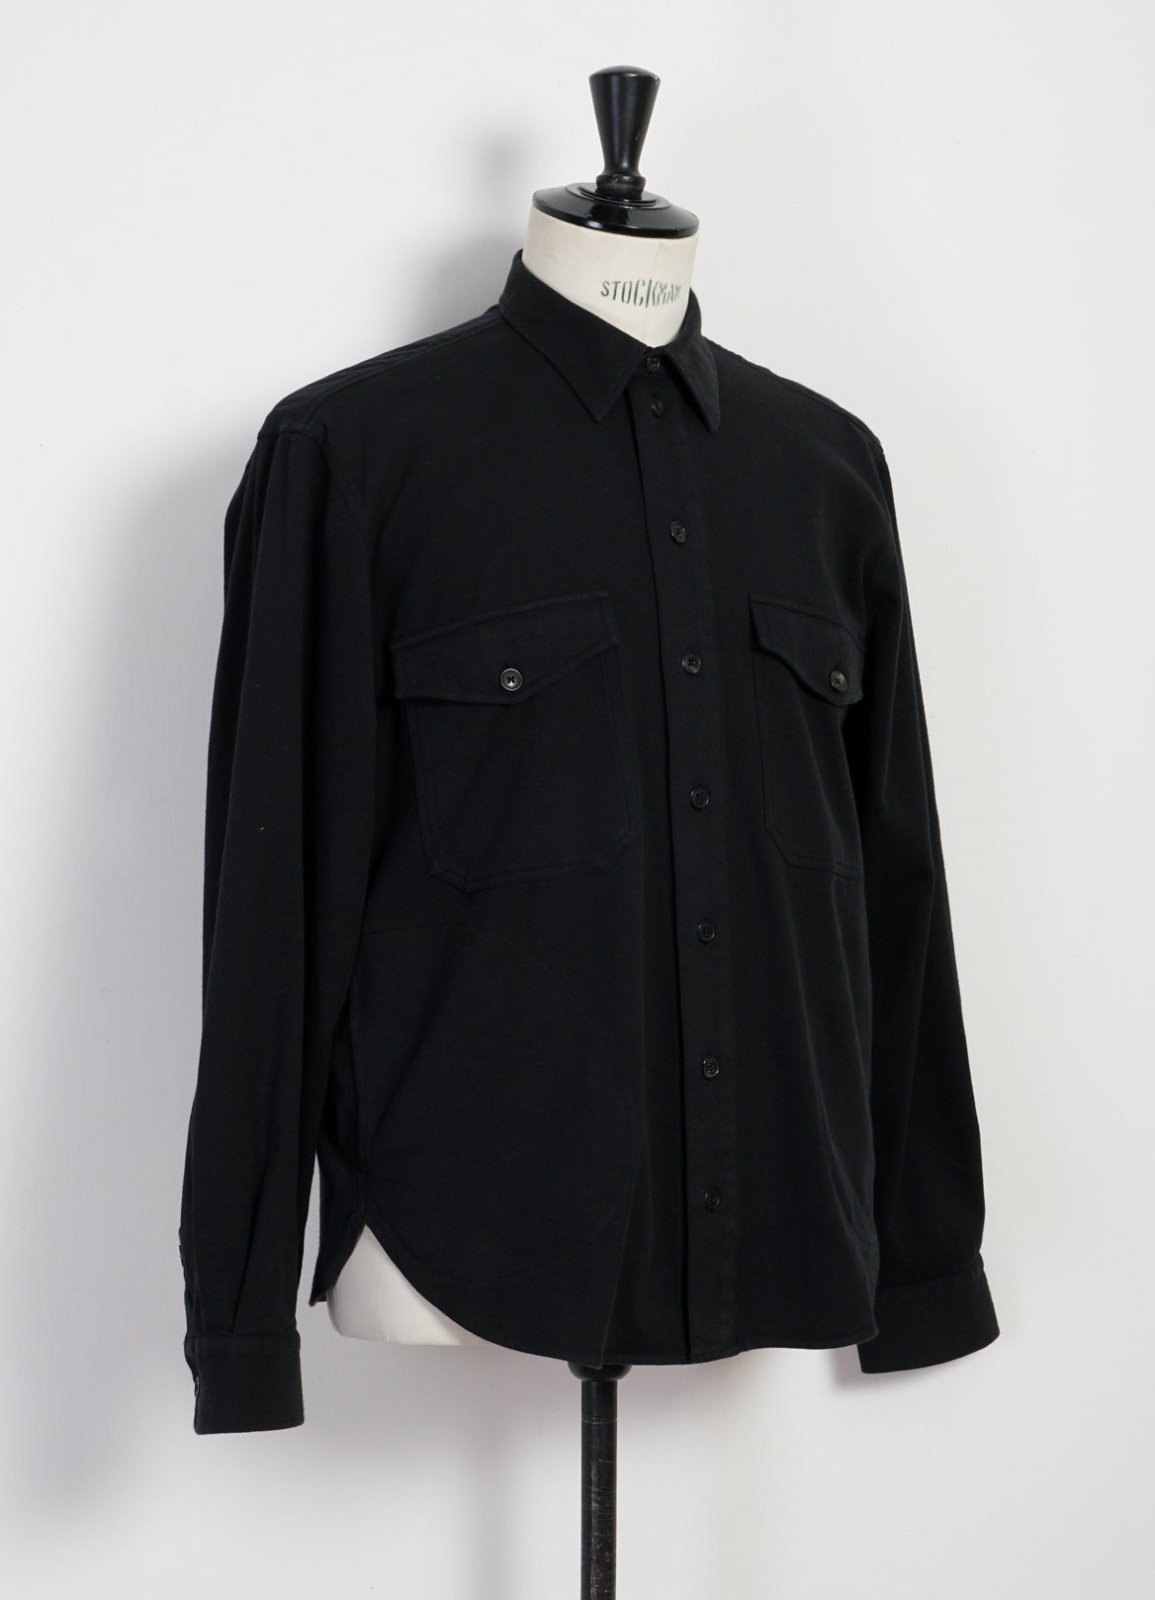 HANSEN GARMENTS - RUBEN | Casual Over Shirt | Black - HANSEN Garments